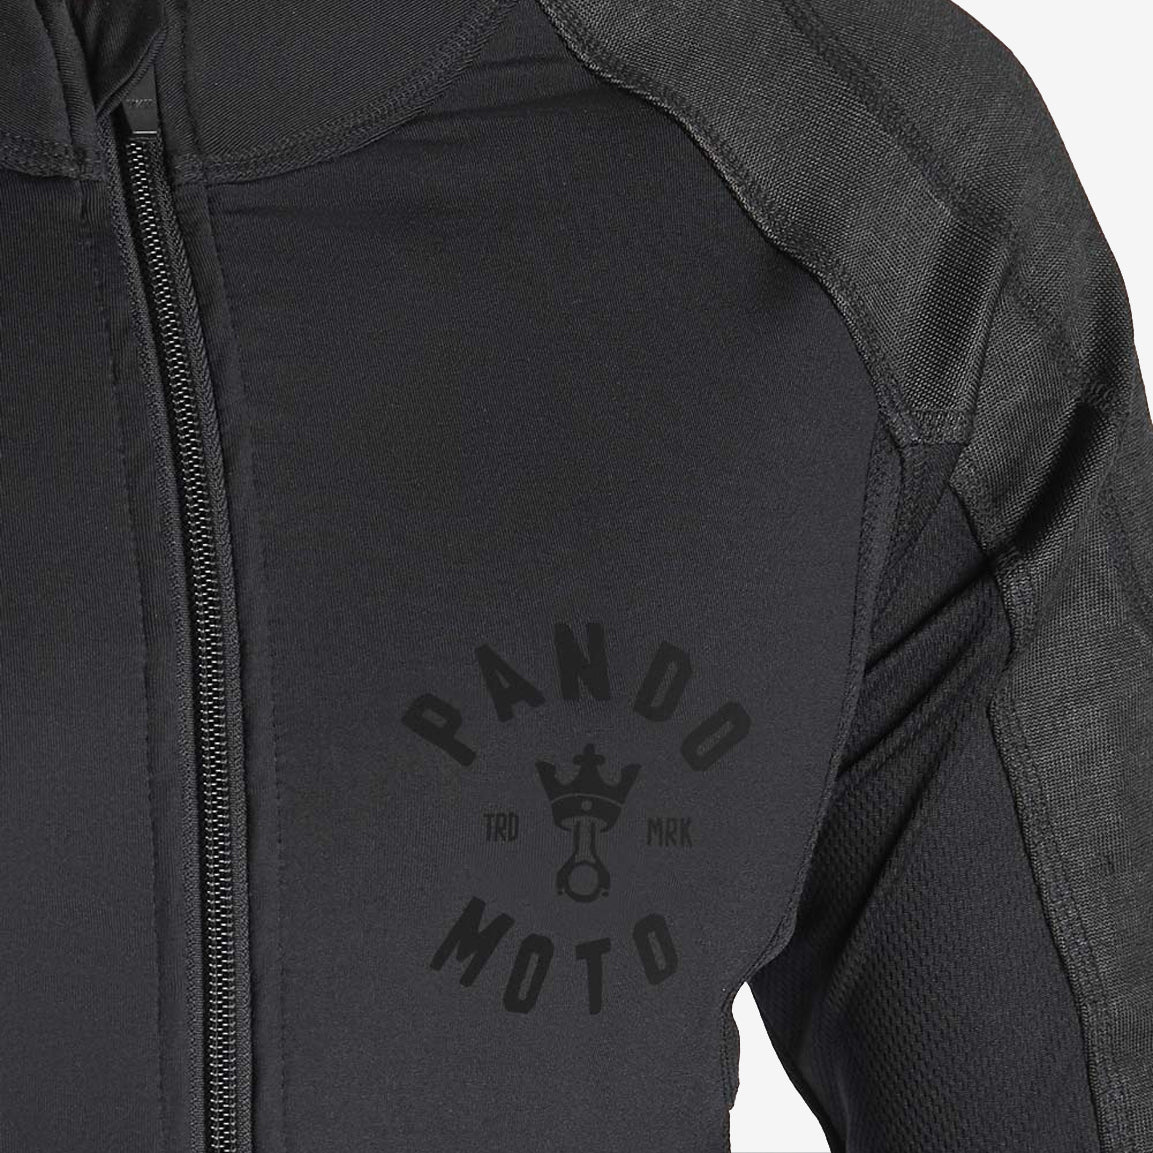 Pando Moto SHELL 02 Motorrad Finest Riders | Protektoren-Unterwäsche UH